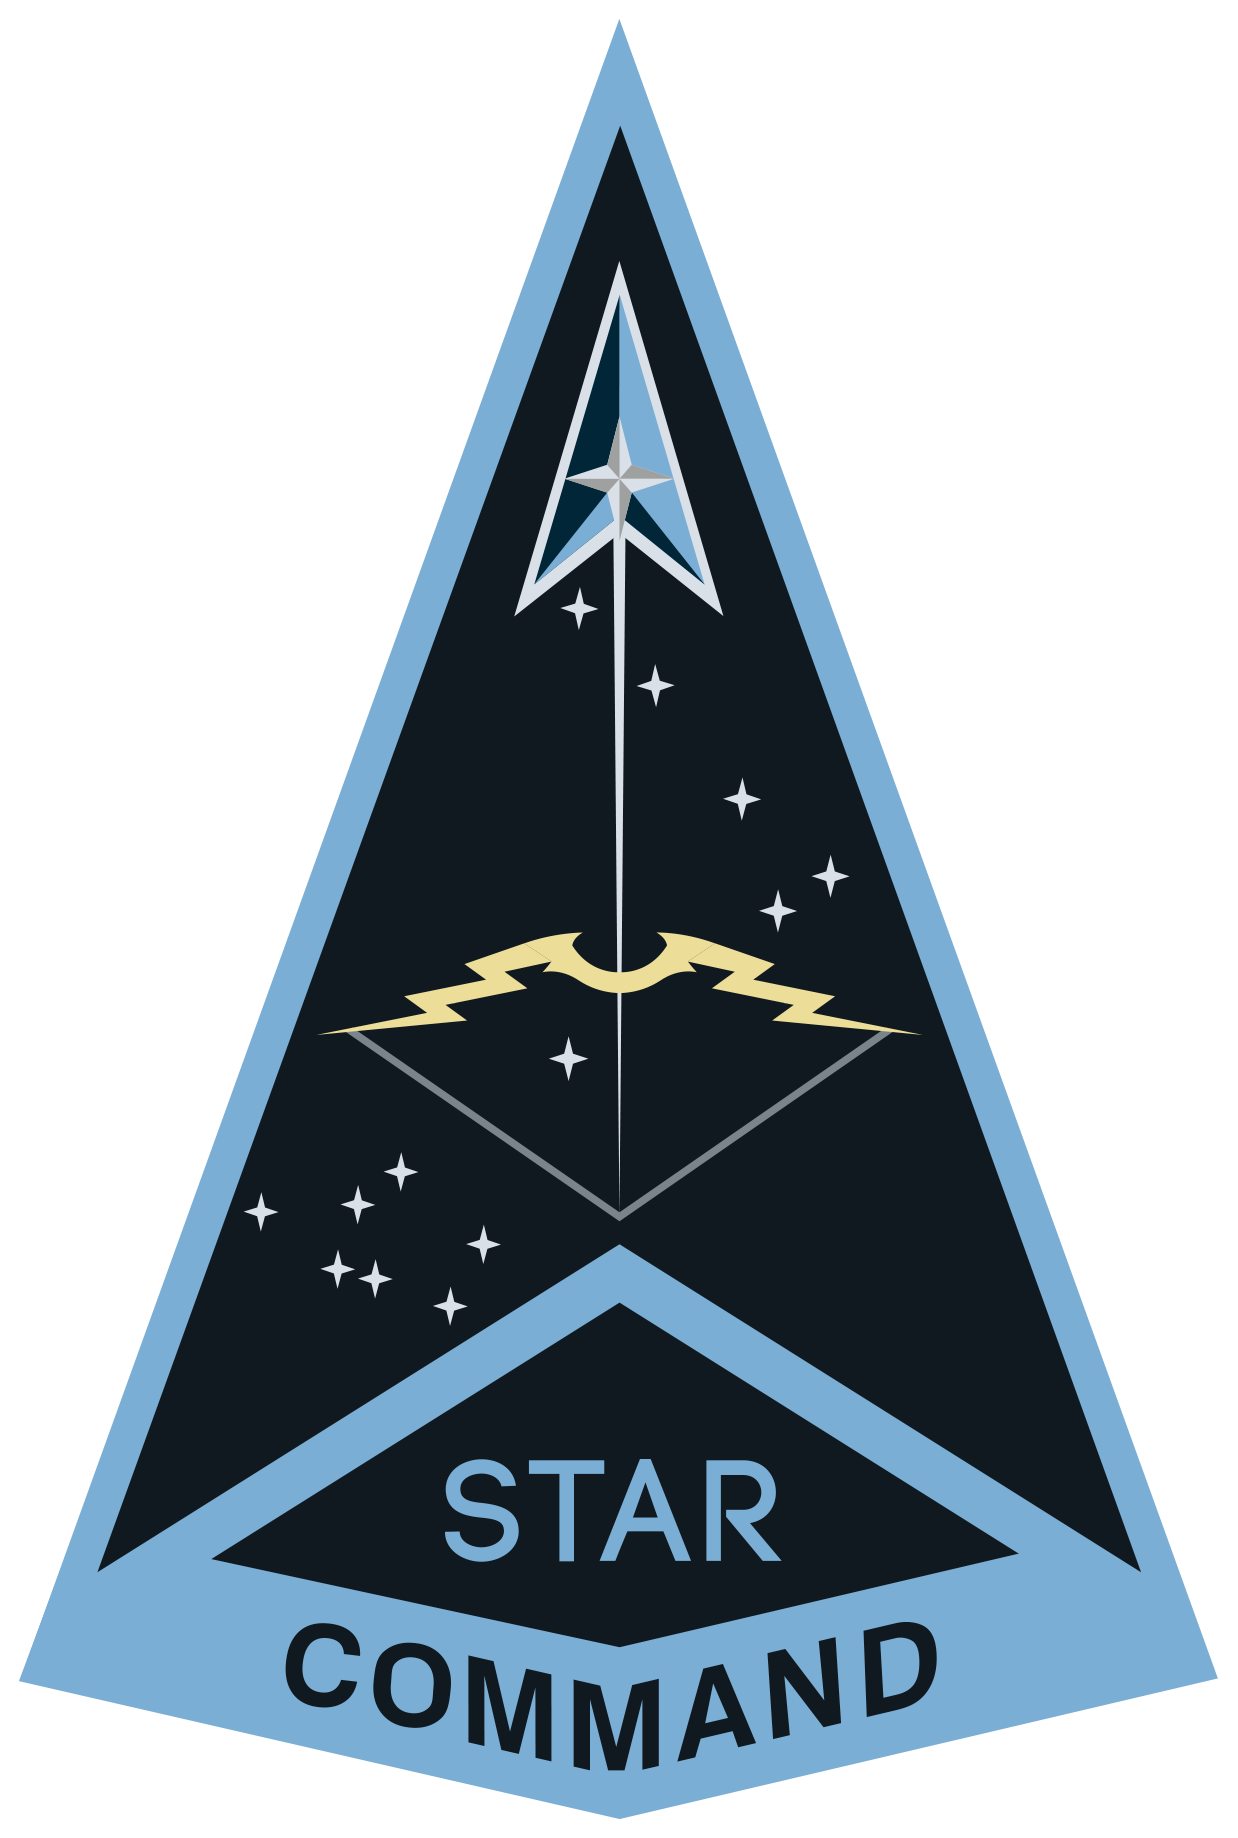 Star Command emblem